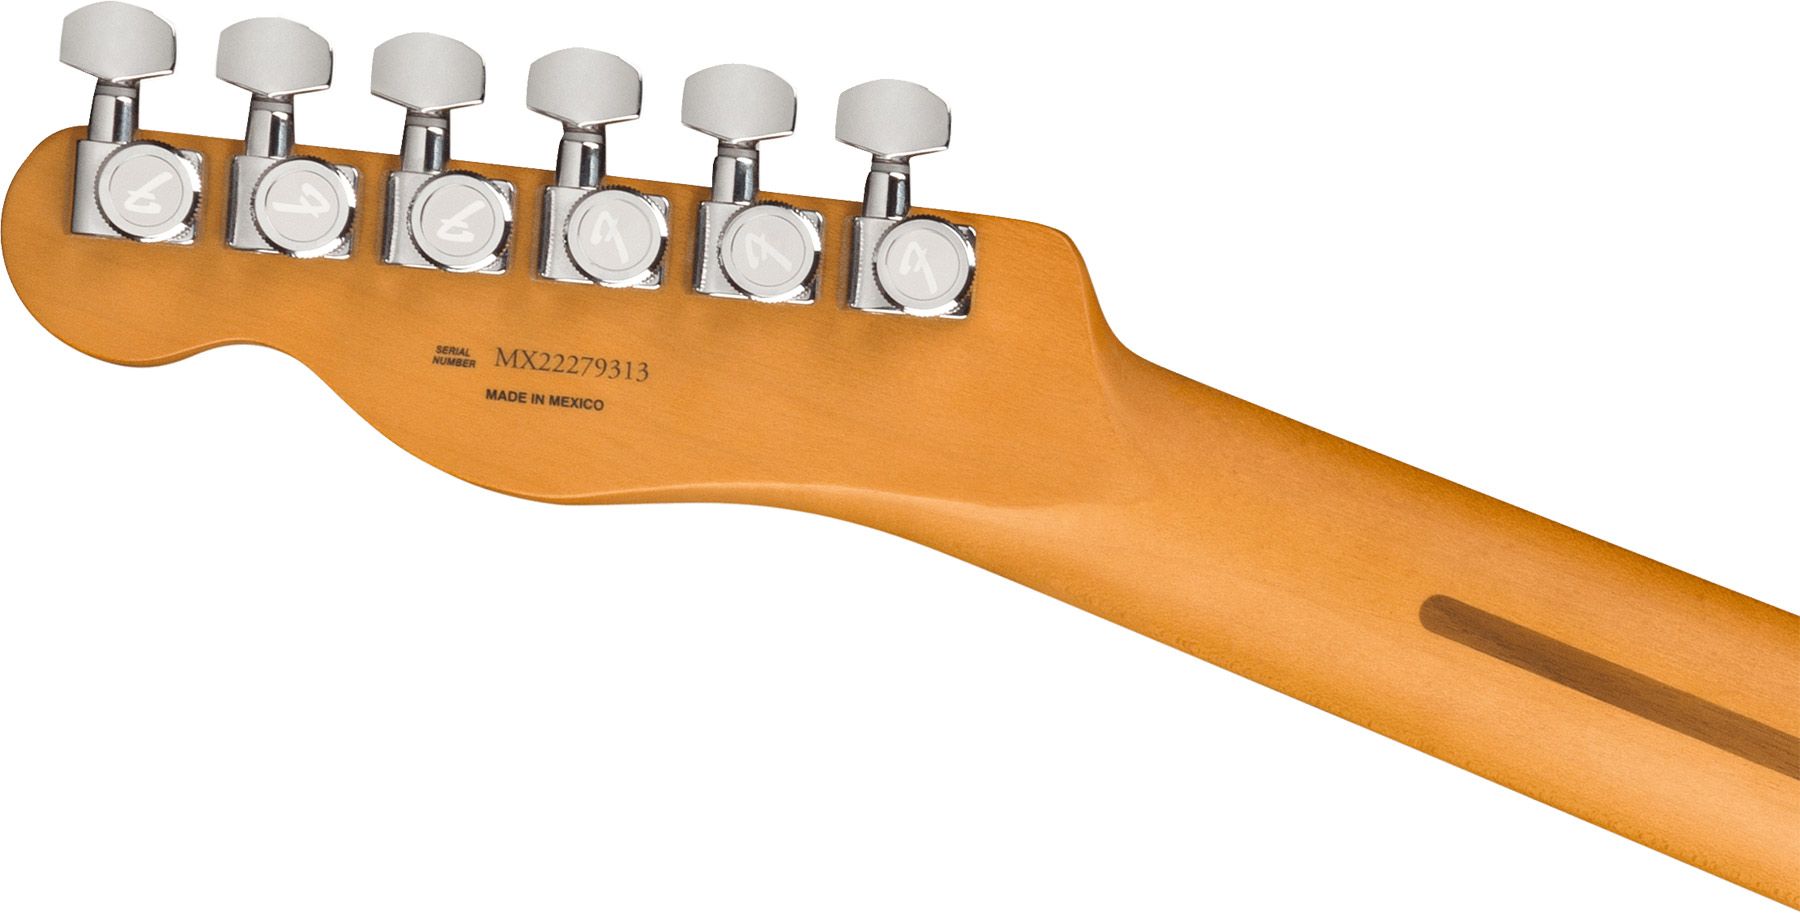 Fender Tele Player Plus Nashville Mex 2023 2s Ht Pf - Sienna Sunburst - Guitarra eléctrica con forma de tel - Variation 3